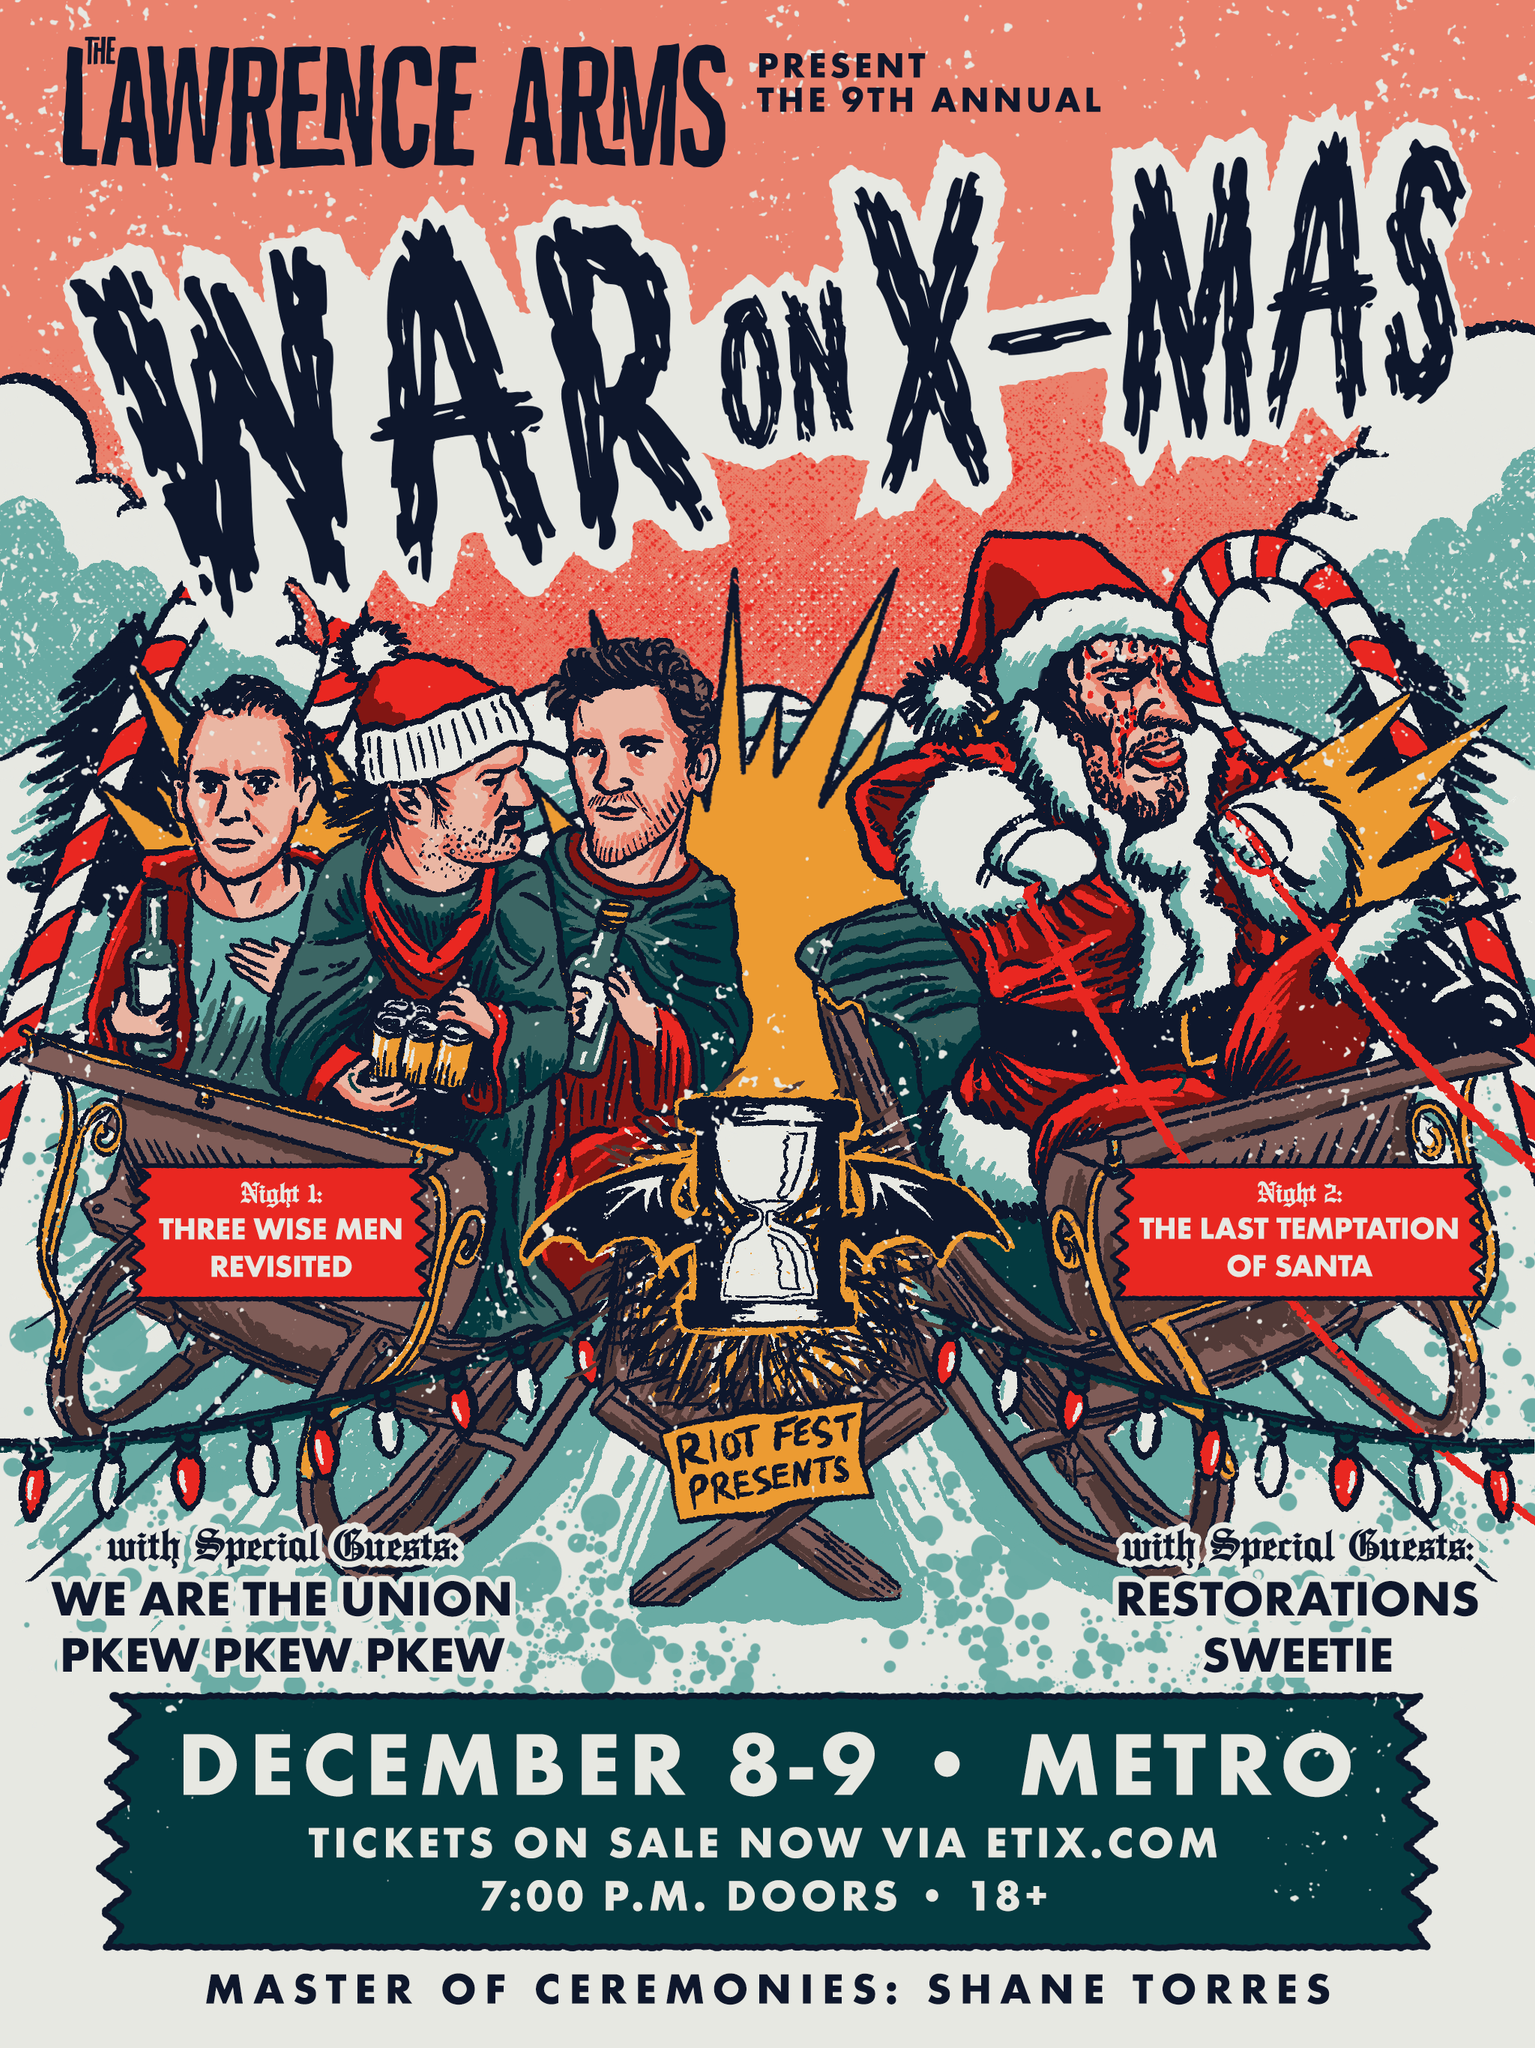 War on Xmas 9 Poster